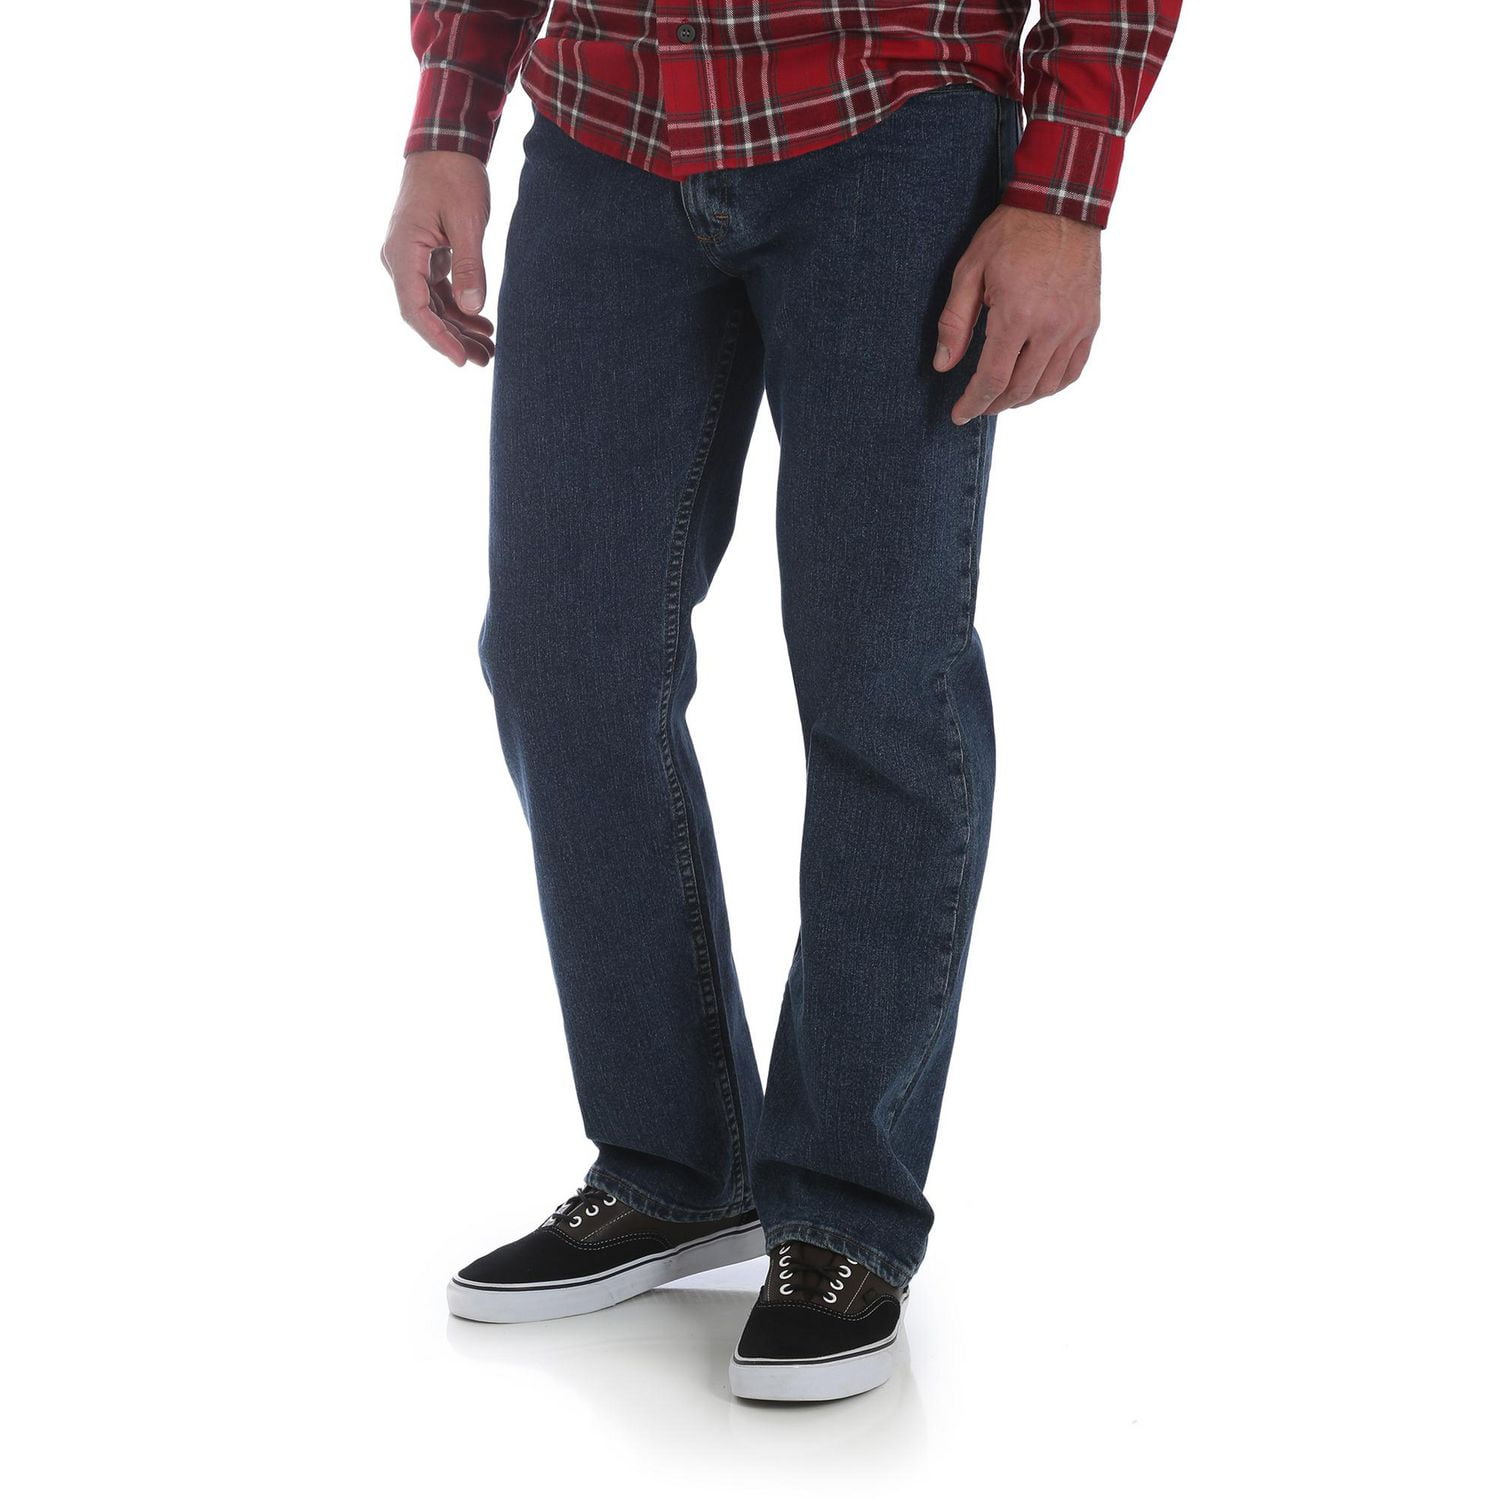 Wrangler Authentics Men's Regular Fit Comfort Flex Waist Jean, Black, 29W x  30L at  Men's Clothing store